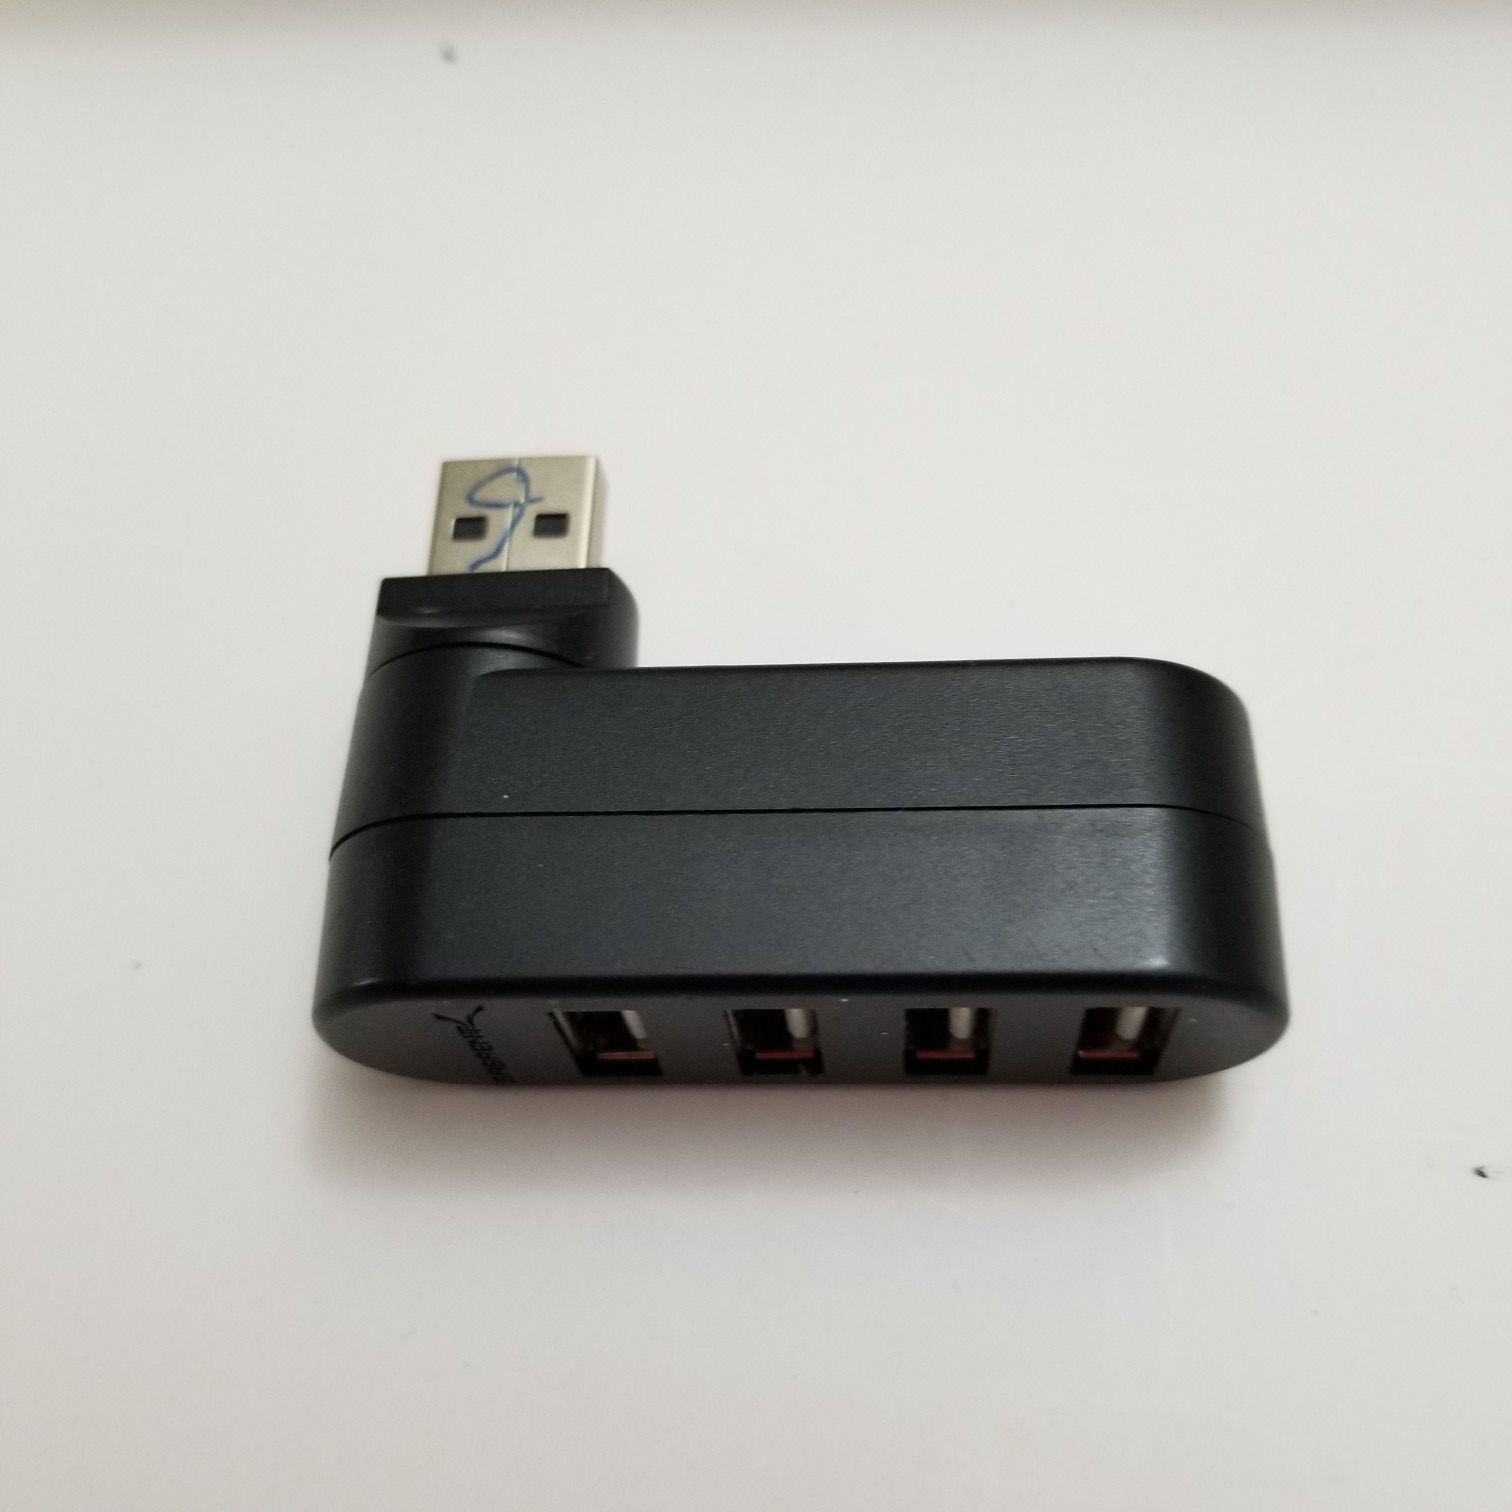 Sabrent 4 USB 2.0 ports